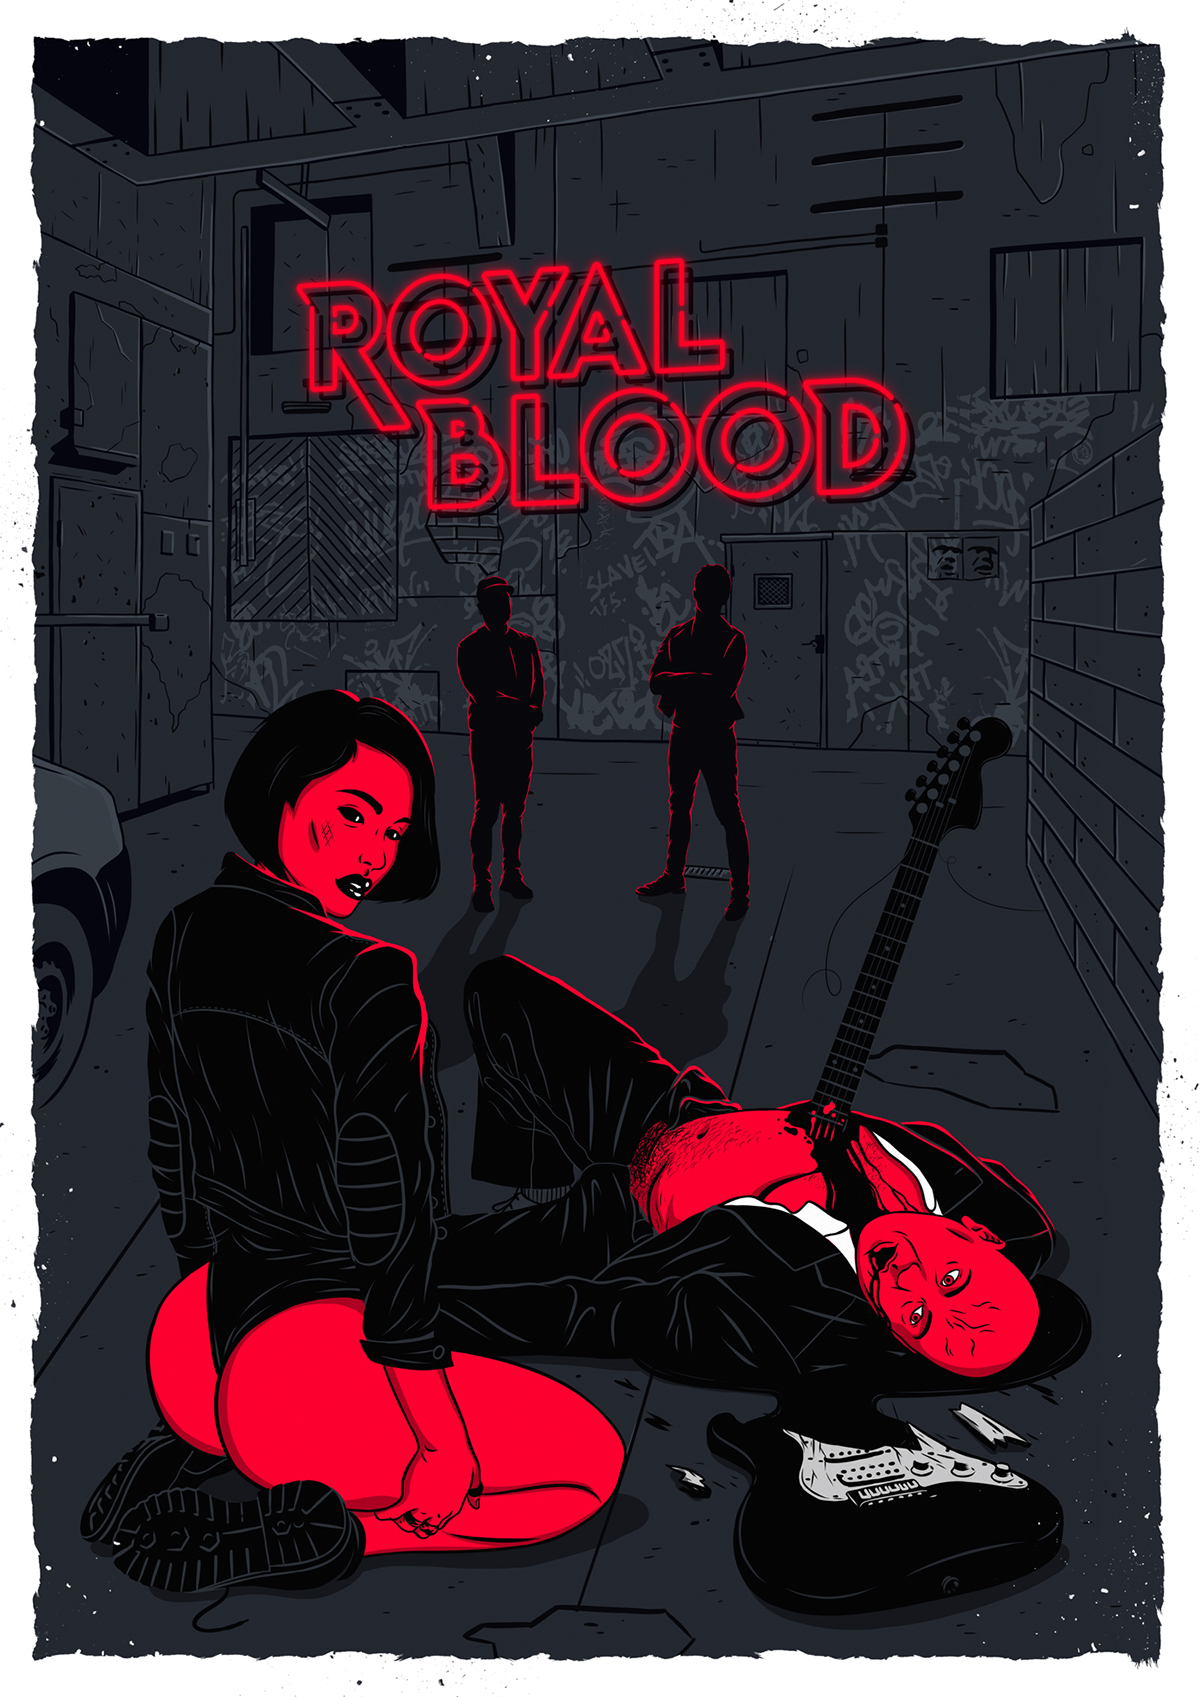 Royal Blood Poster New 2017 UK Music Get So Dark Tour FREE P+P CHOOSE YOUR SIZE 